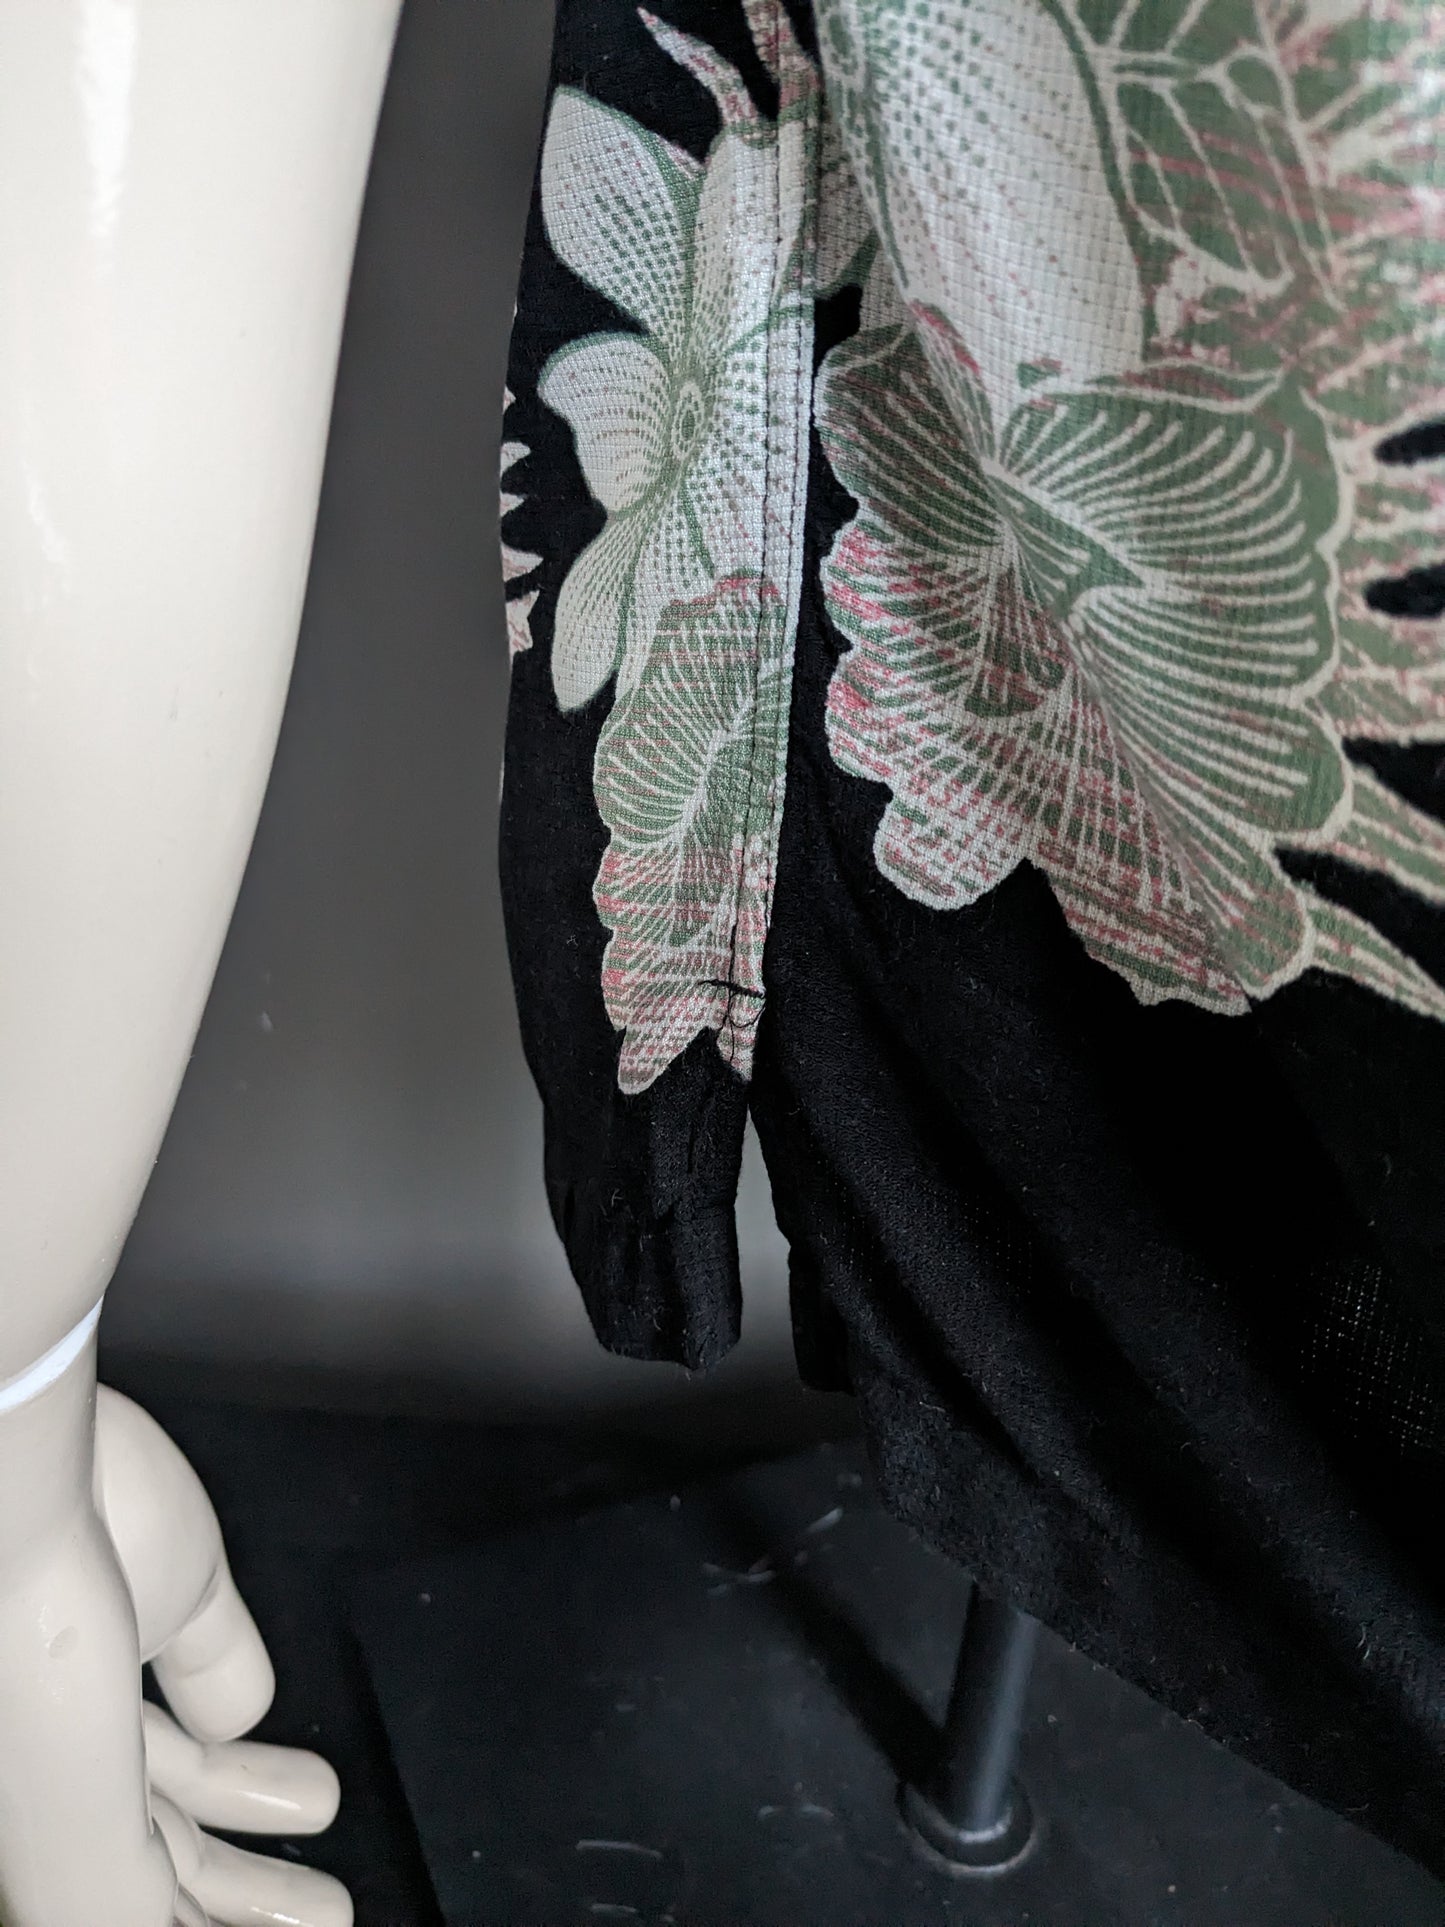 Caribbea Shirt corta di seta originale Hawaii. Stampa floreale beige rosso verde nero. Taglia M. 55% Silk.